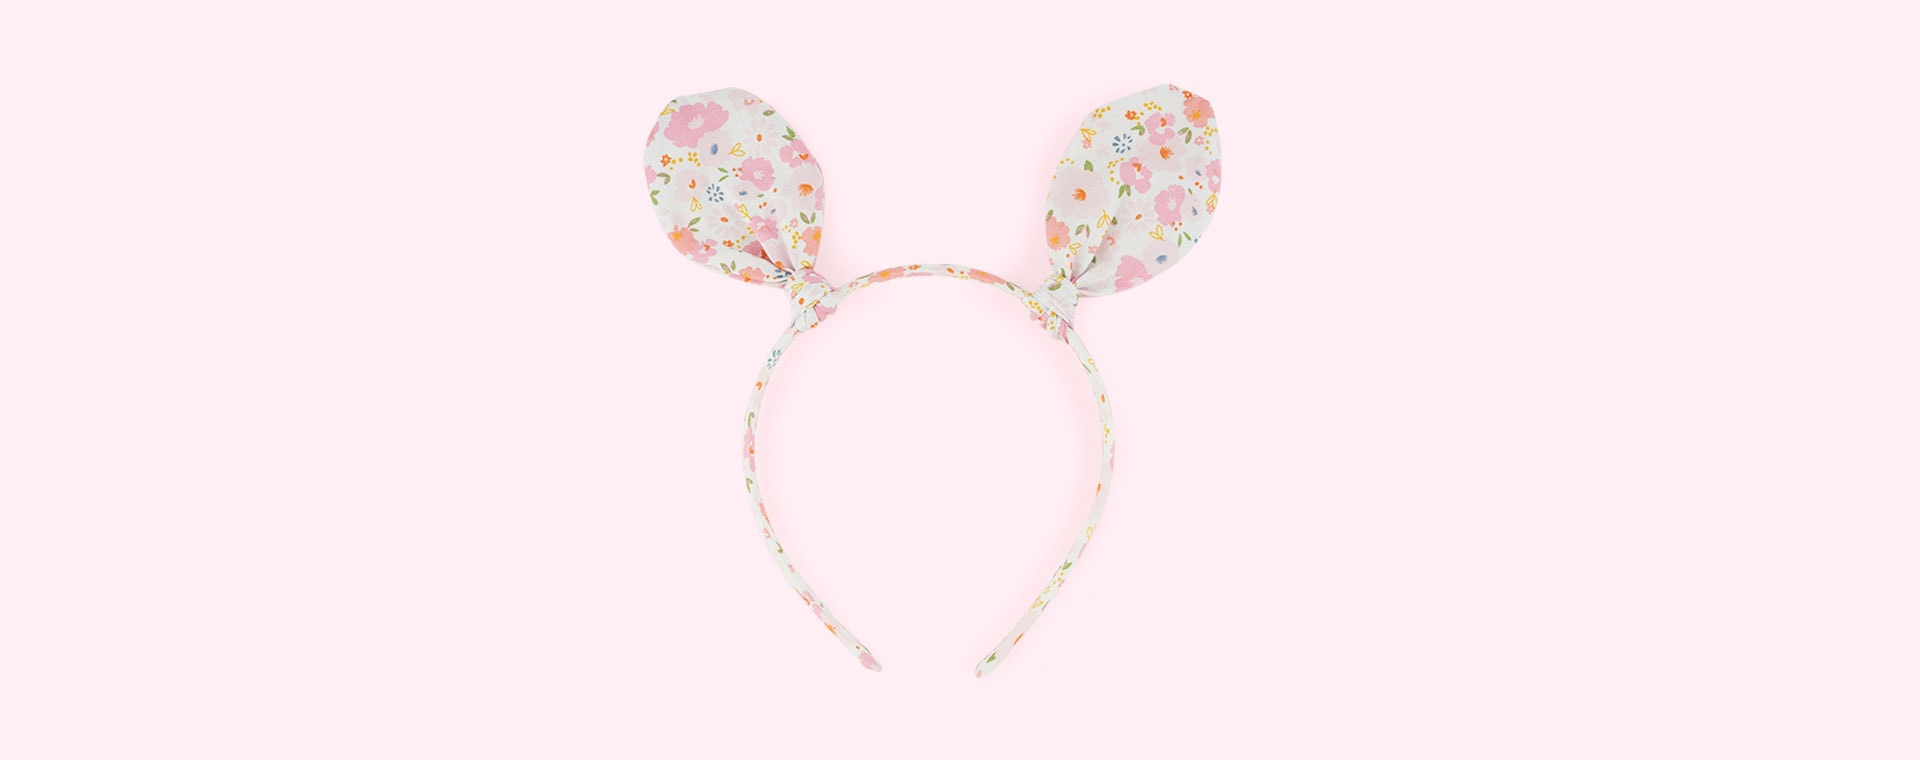 Pink Rockahula Kids Bloom Bunny Ears Headband